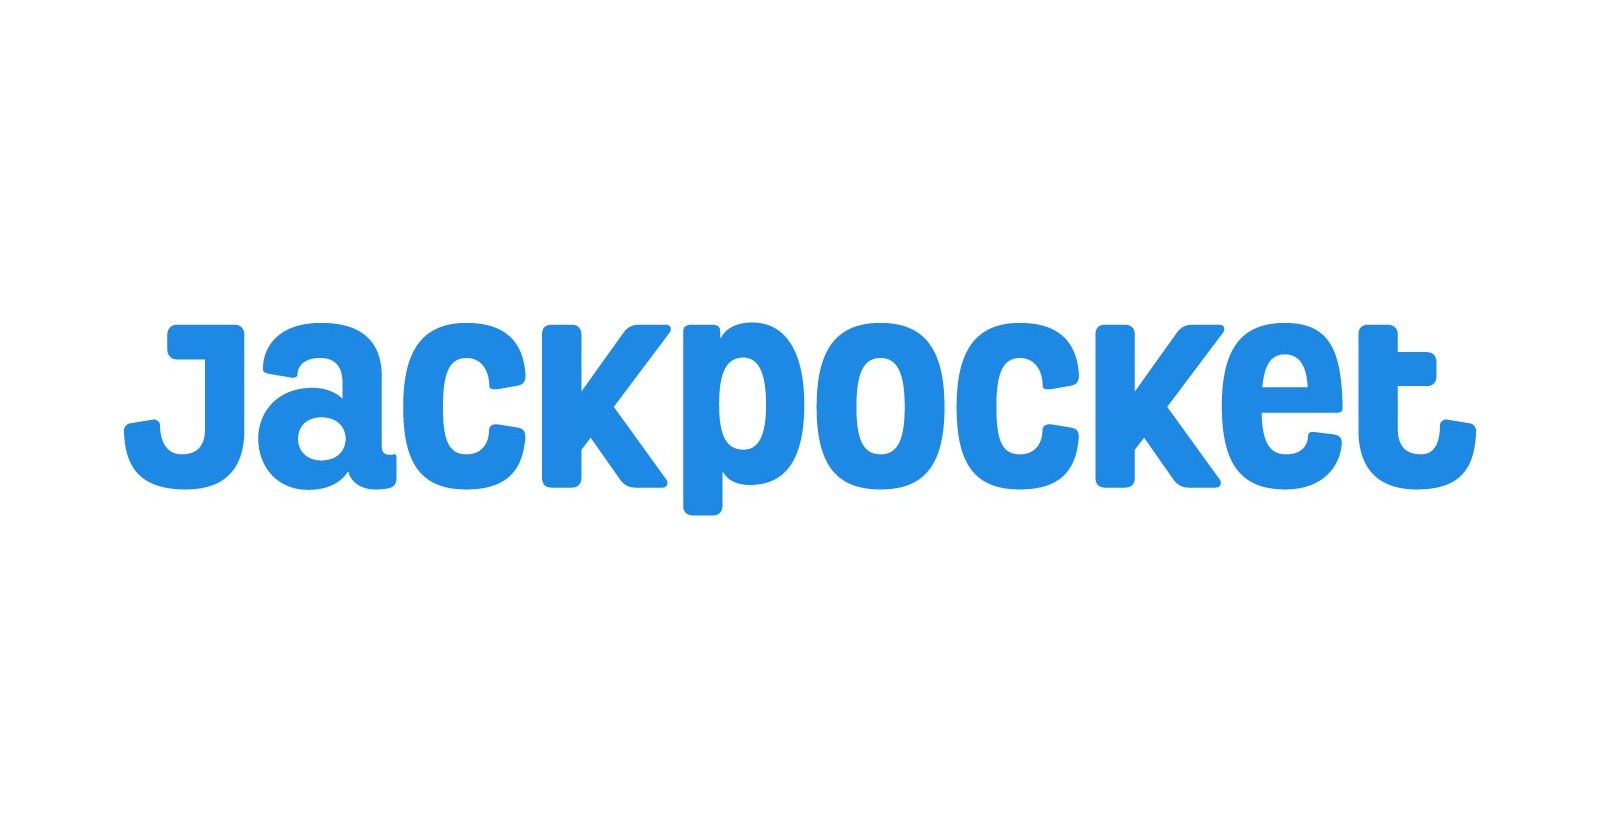 Is Jackpocket App Legit